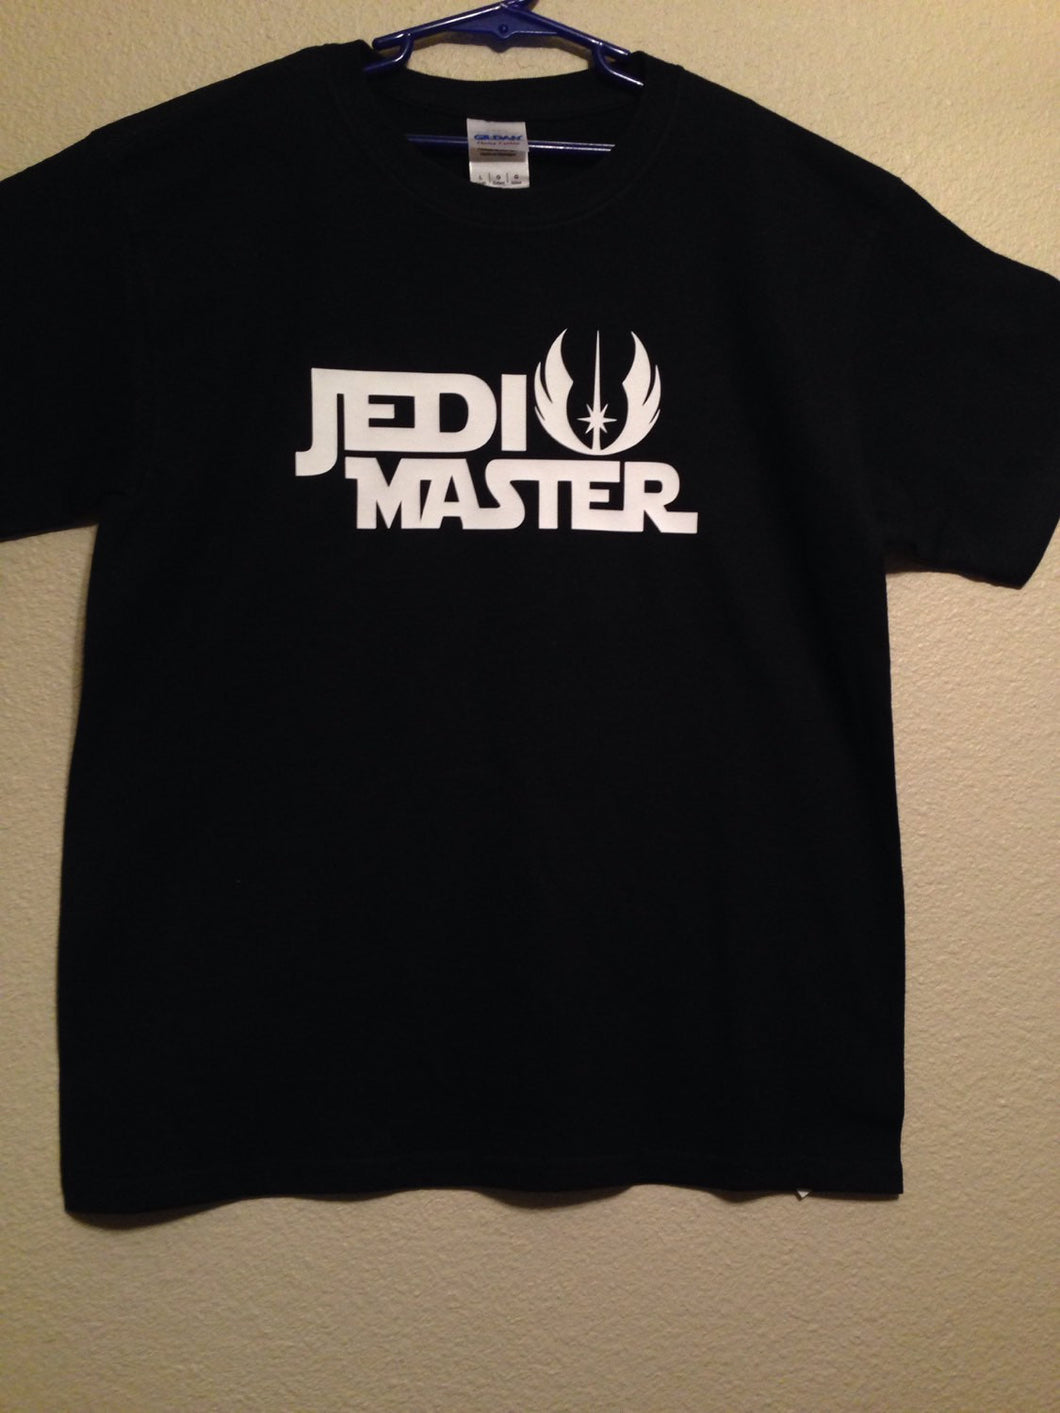 jedi master shirt